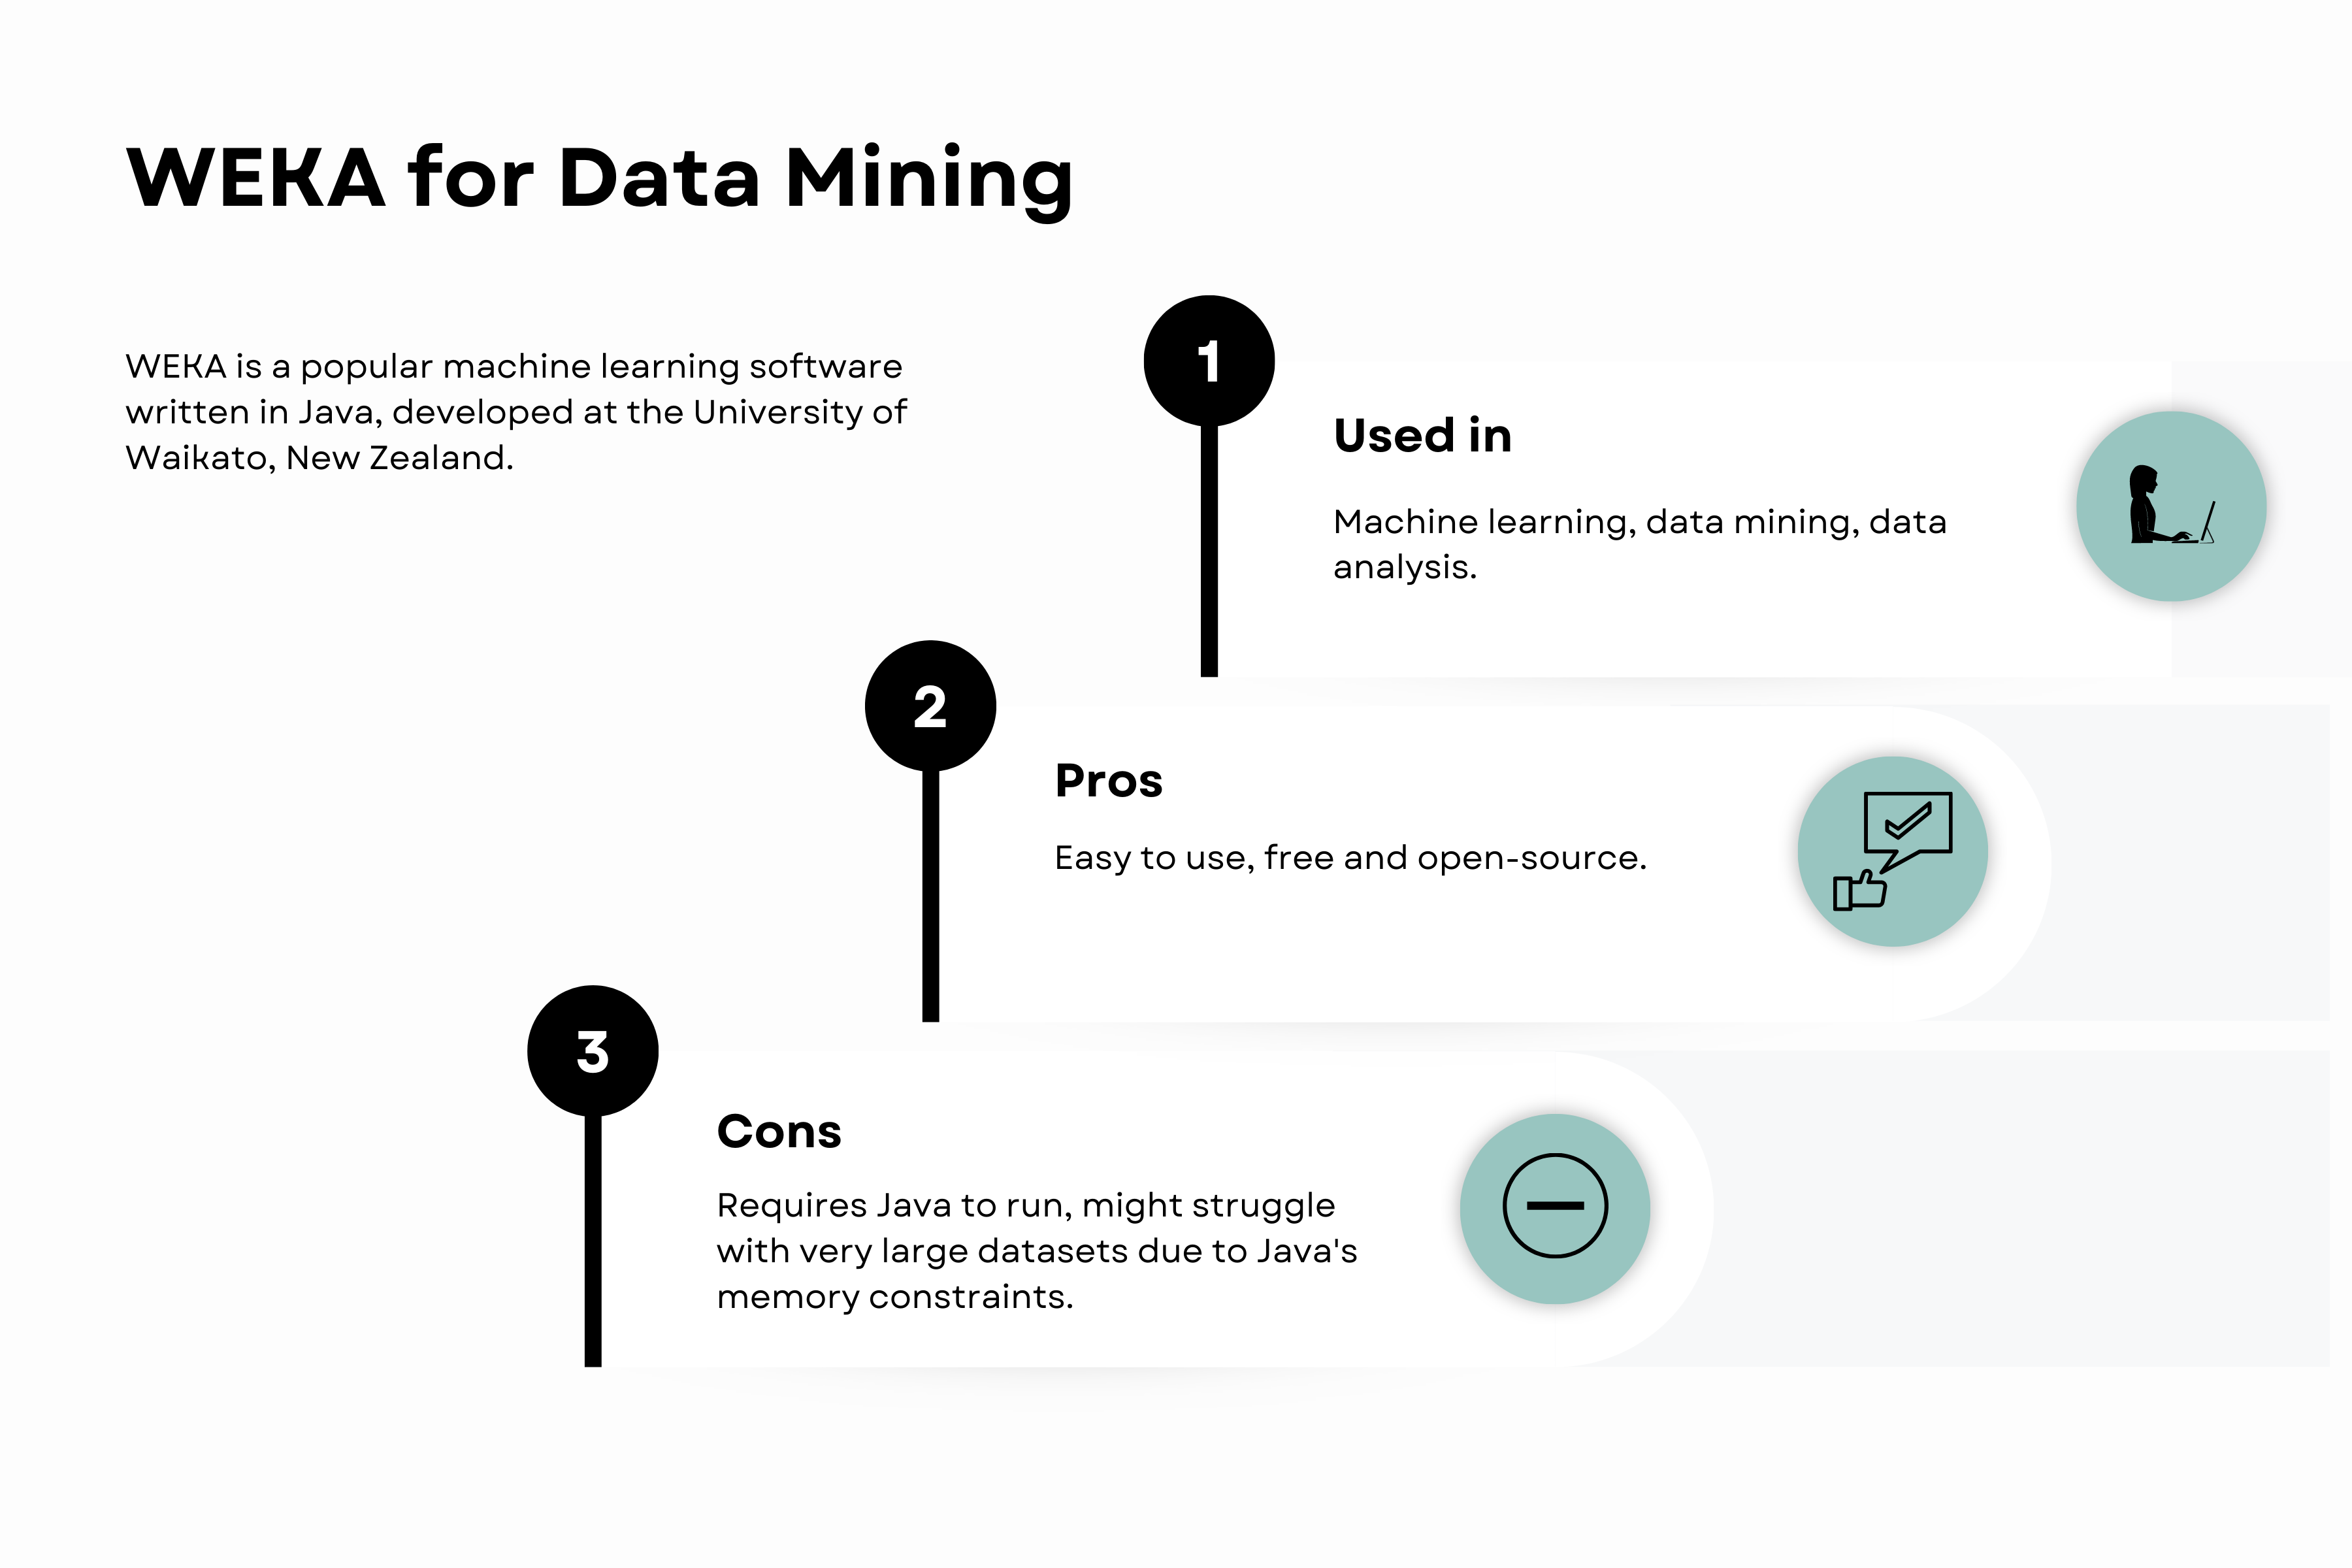 WEKA for data mining